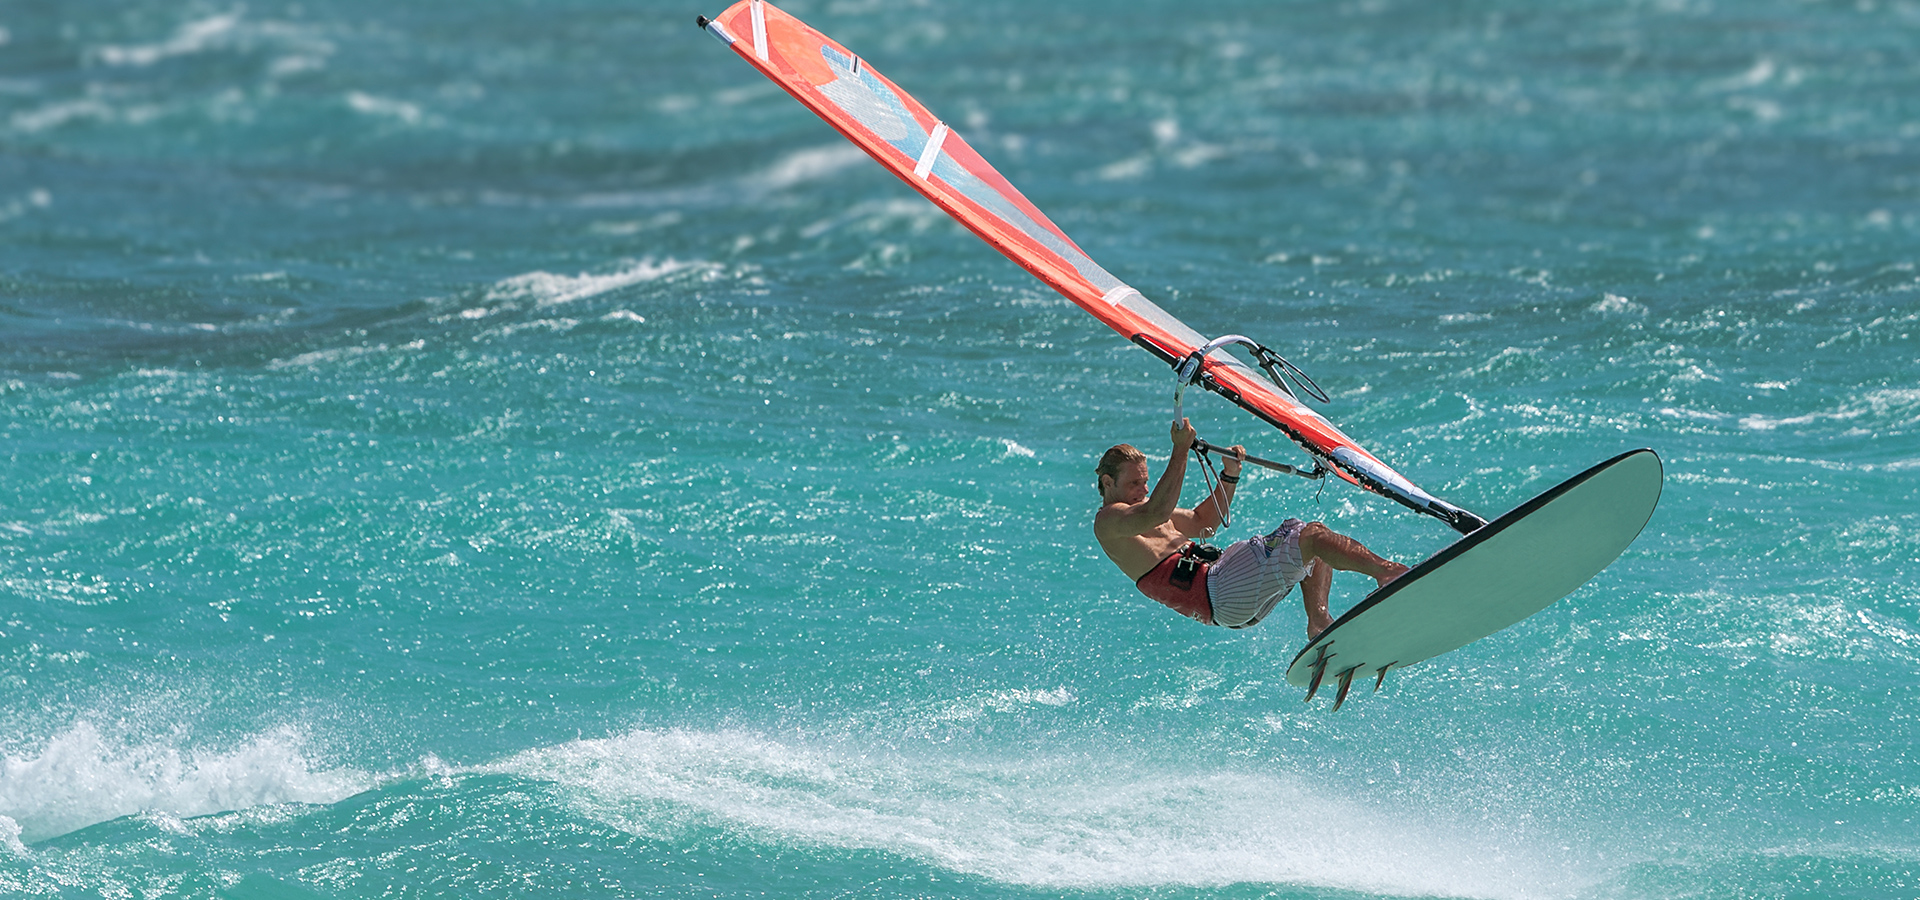 vacanza windsurf toscana